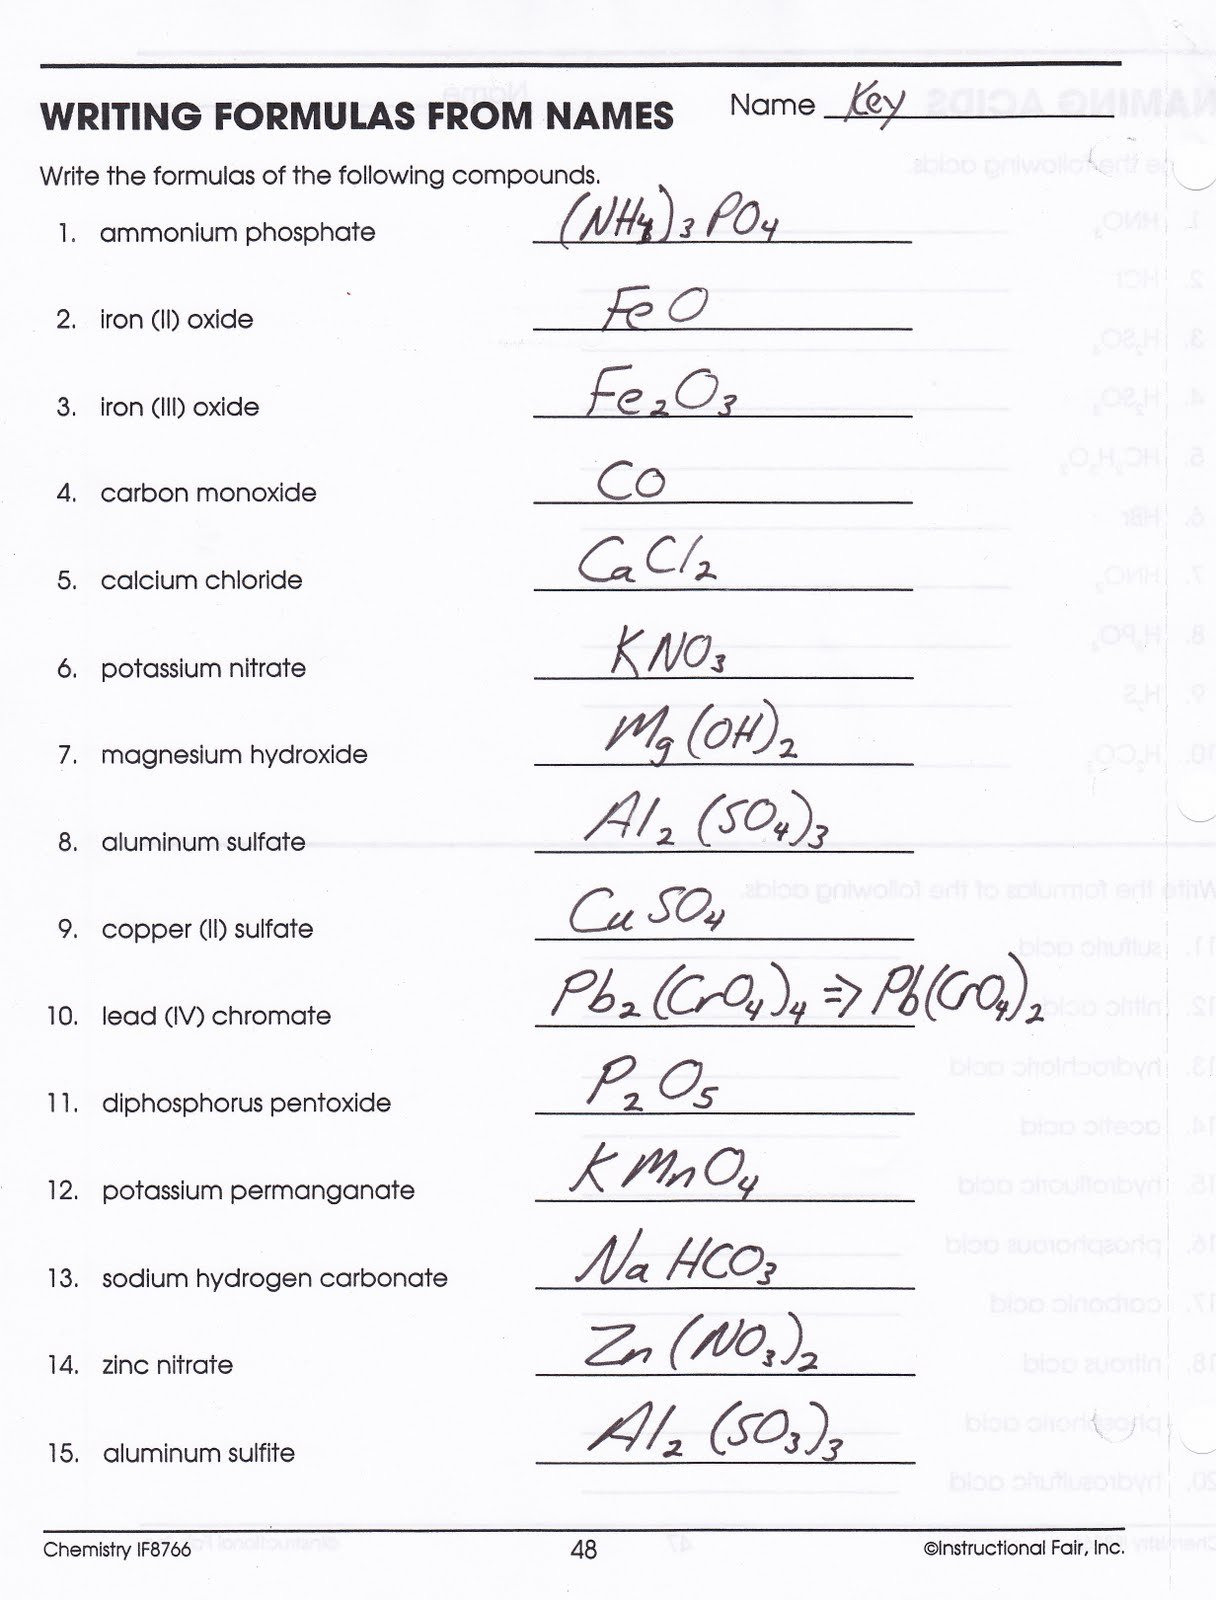 Chemical Names And Formulas Worksheet Answers Electron Configuration Regarding Formula Writing Practice Worksheet